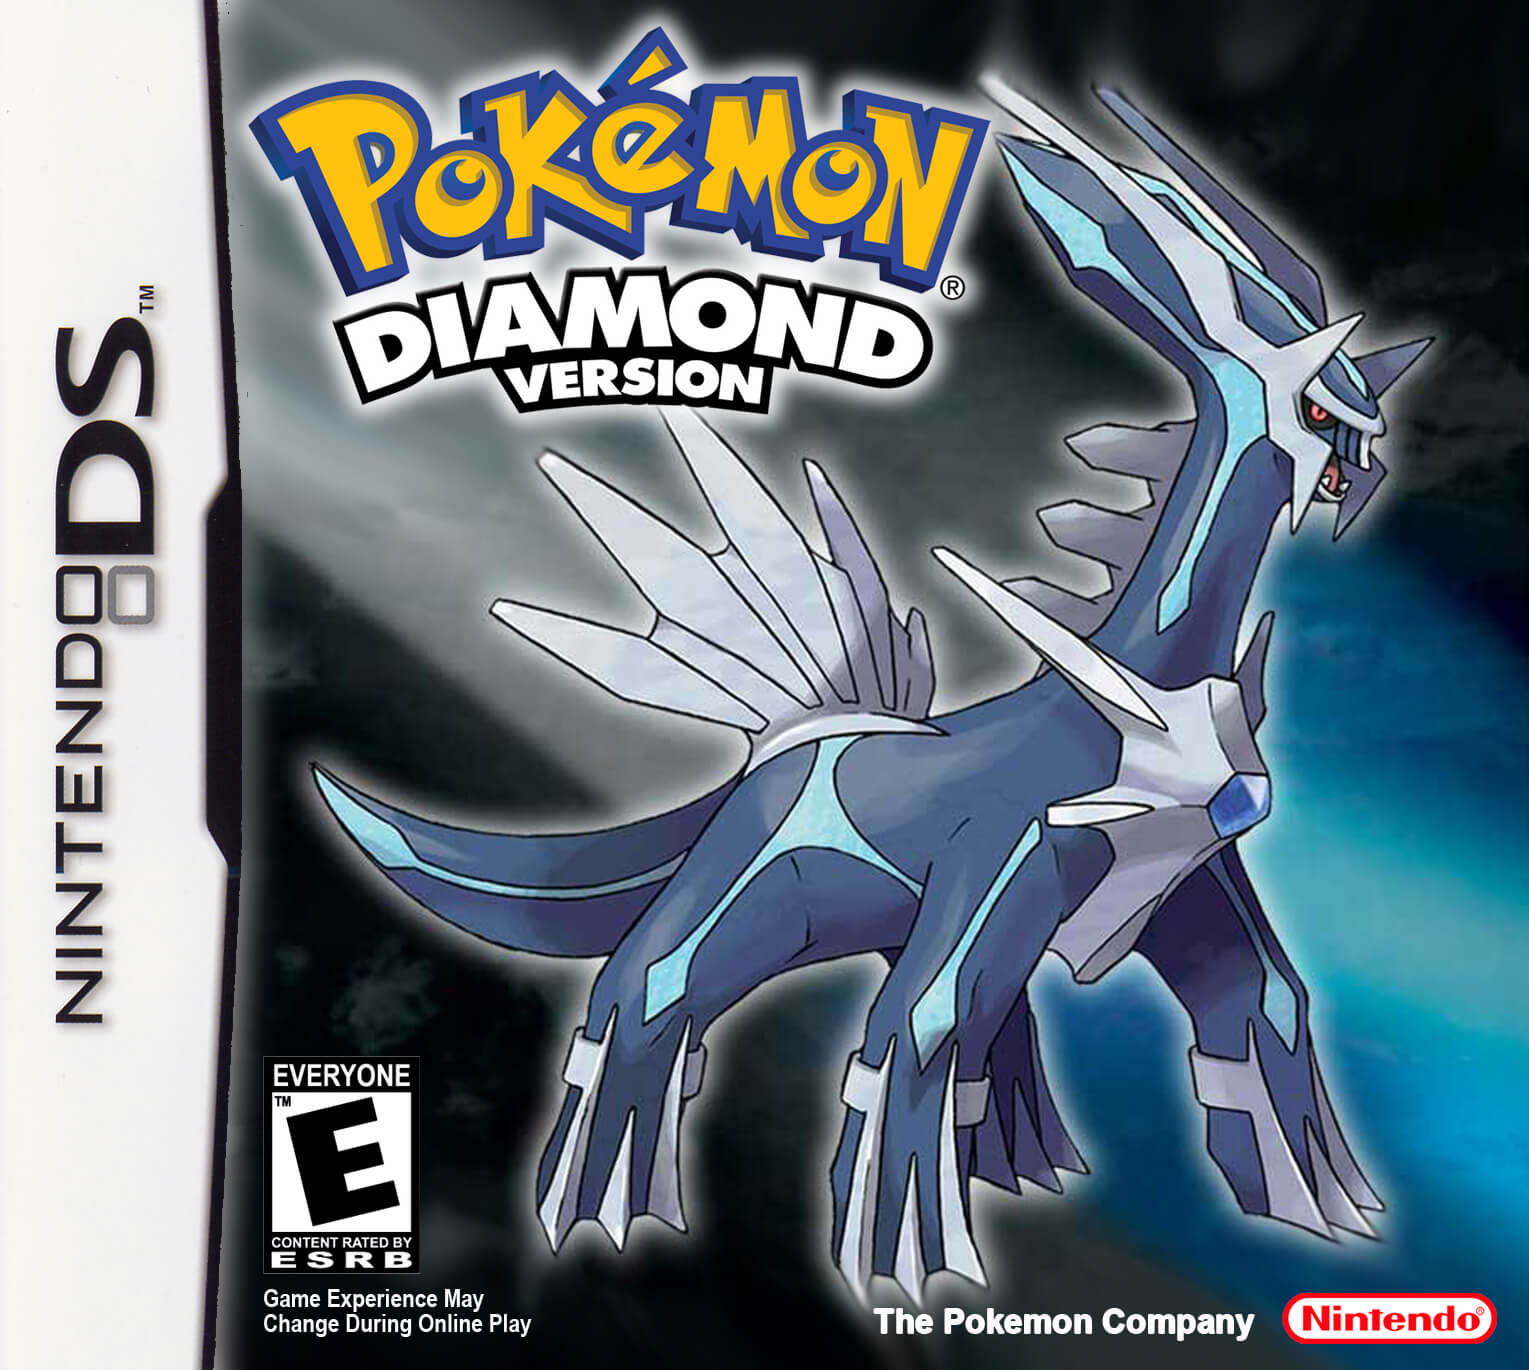 Покемон даймонд. Покемон диамонд. Покемон диамонд игра. Pokemon - Pearl Version. Pokemon Diamond Nintendo.